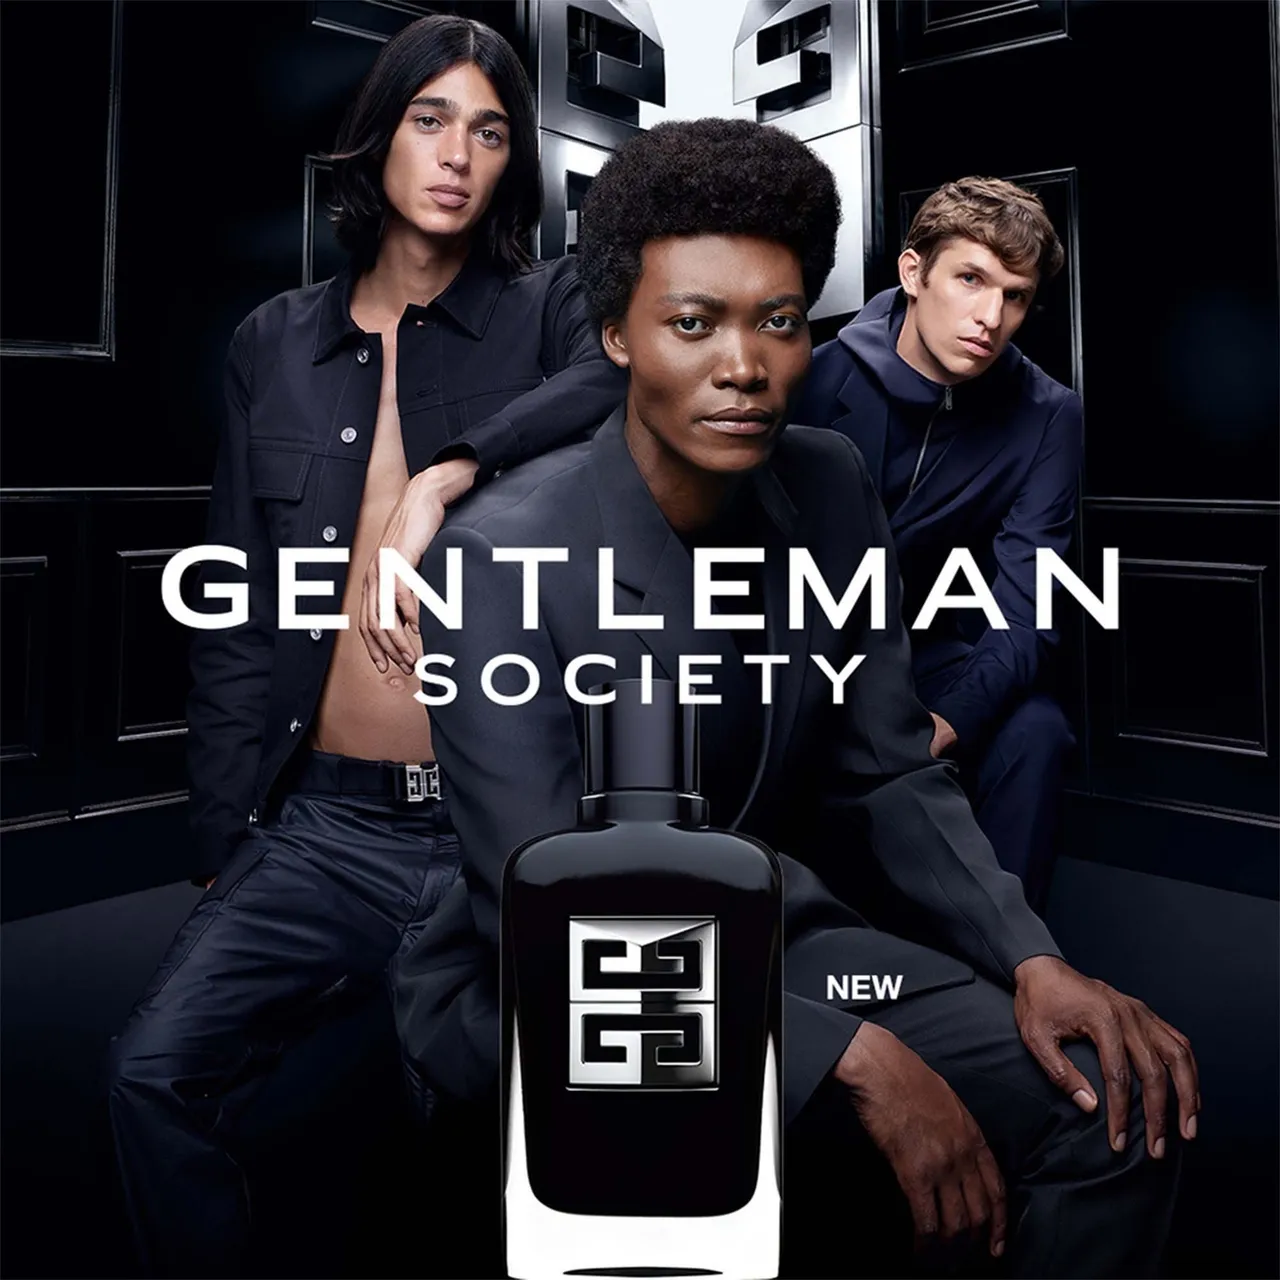 Givenchy Gentleman Society Eau de Parfum 100ml